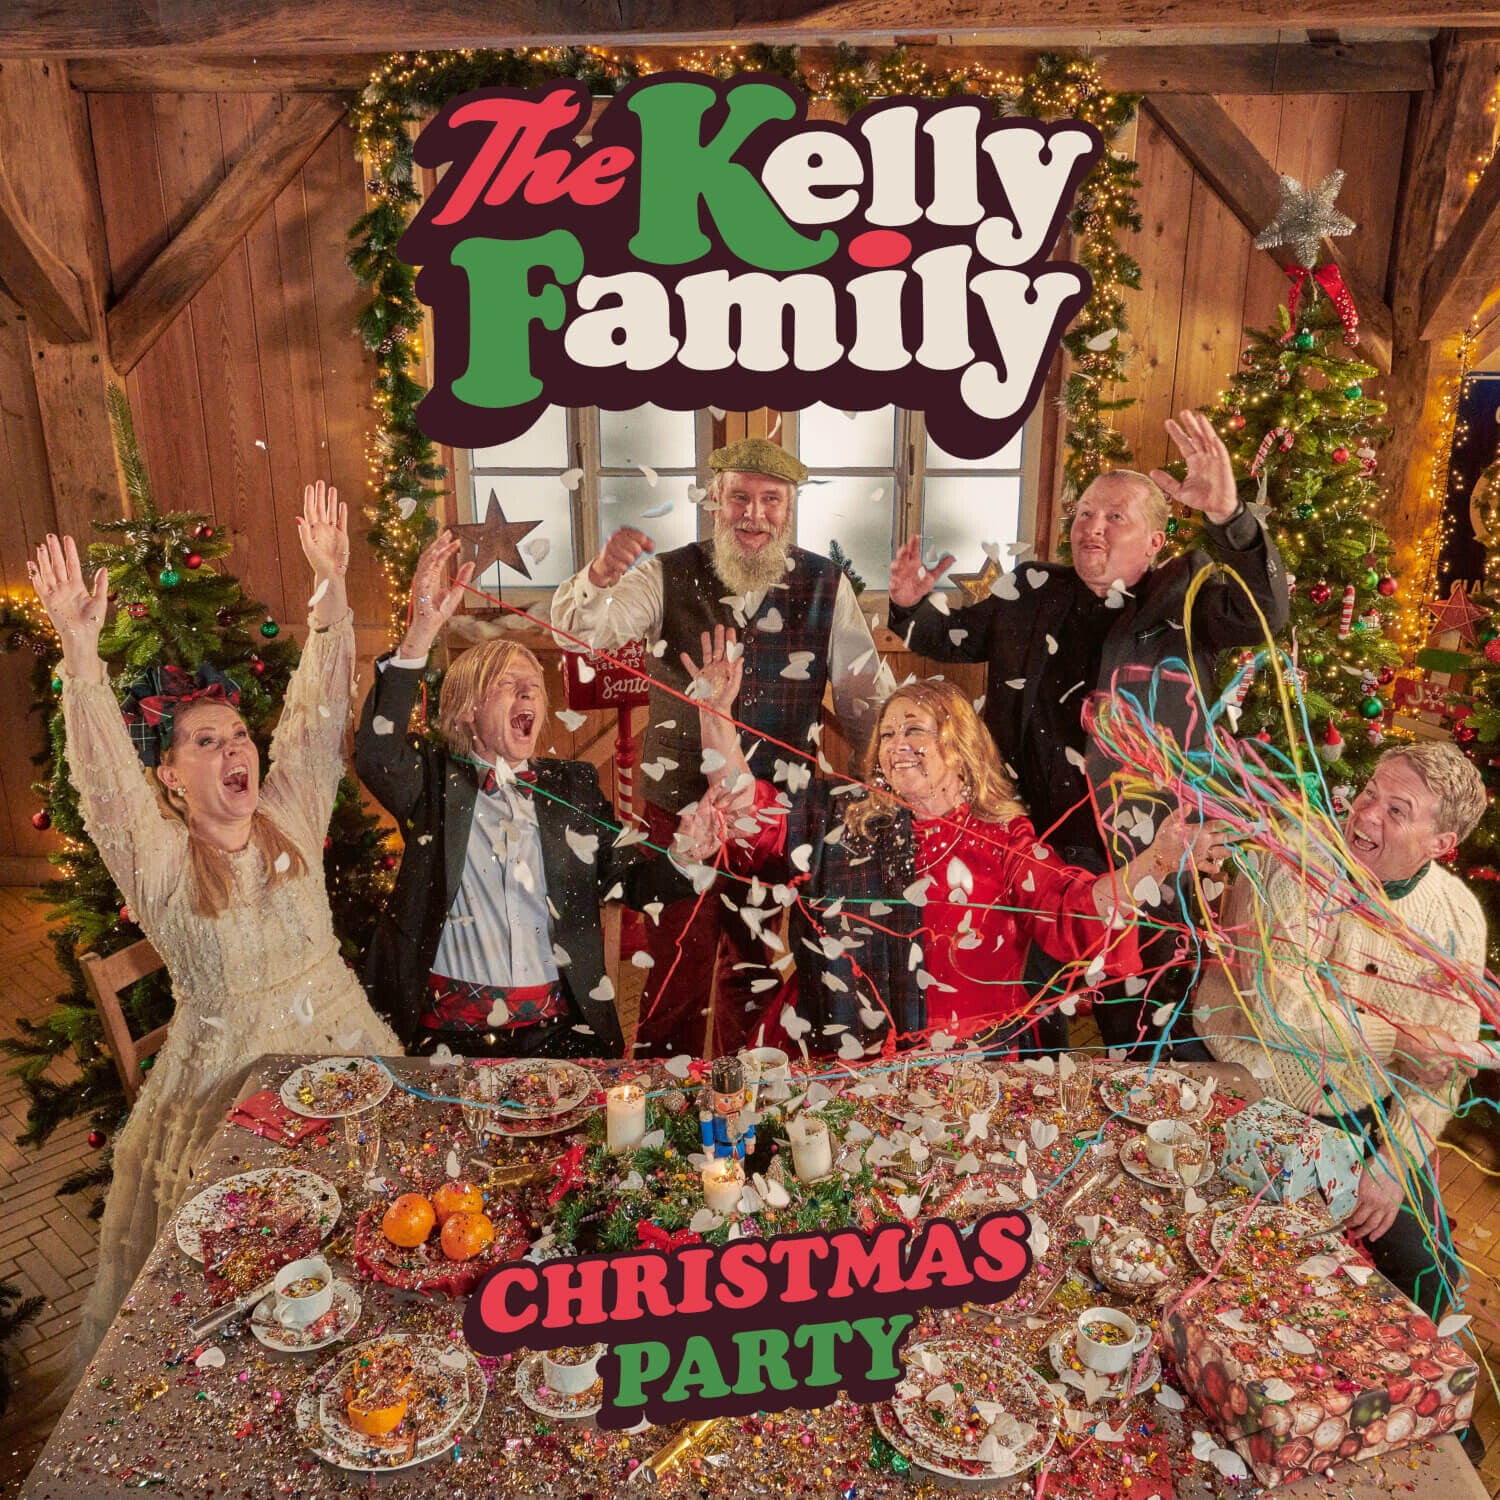 https://images.bravado.de/prod/product-assets/product-asset-data/kelly-family-the/kelly-family/products/139885/web/324778/image-thumb__324778__3000x3000_original/The-Kelly-Family-Christmas-Party-CD-139885-324778.931cbd3e.jpg